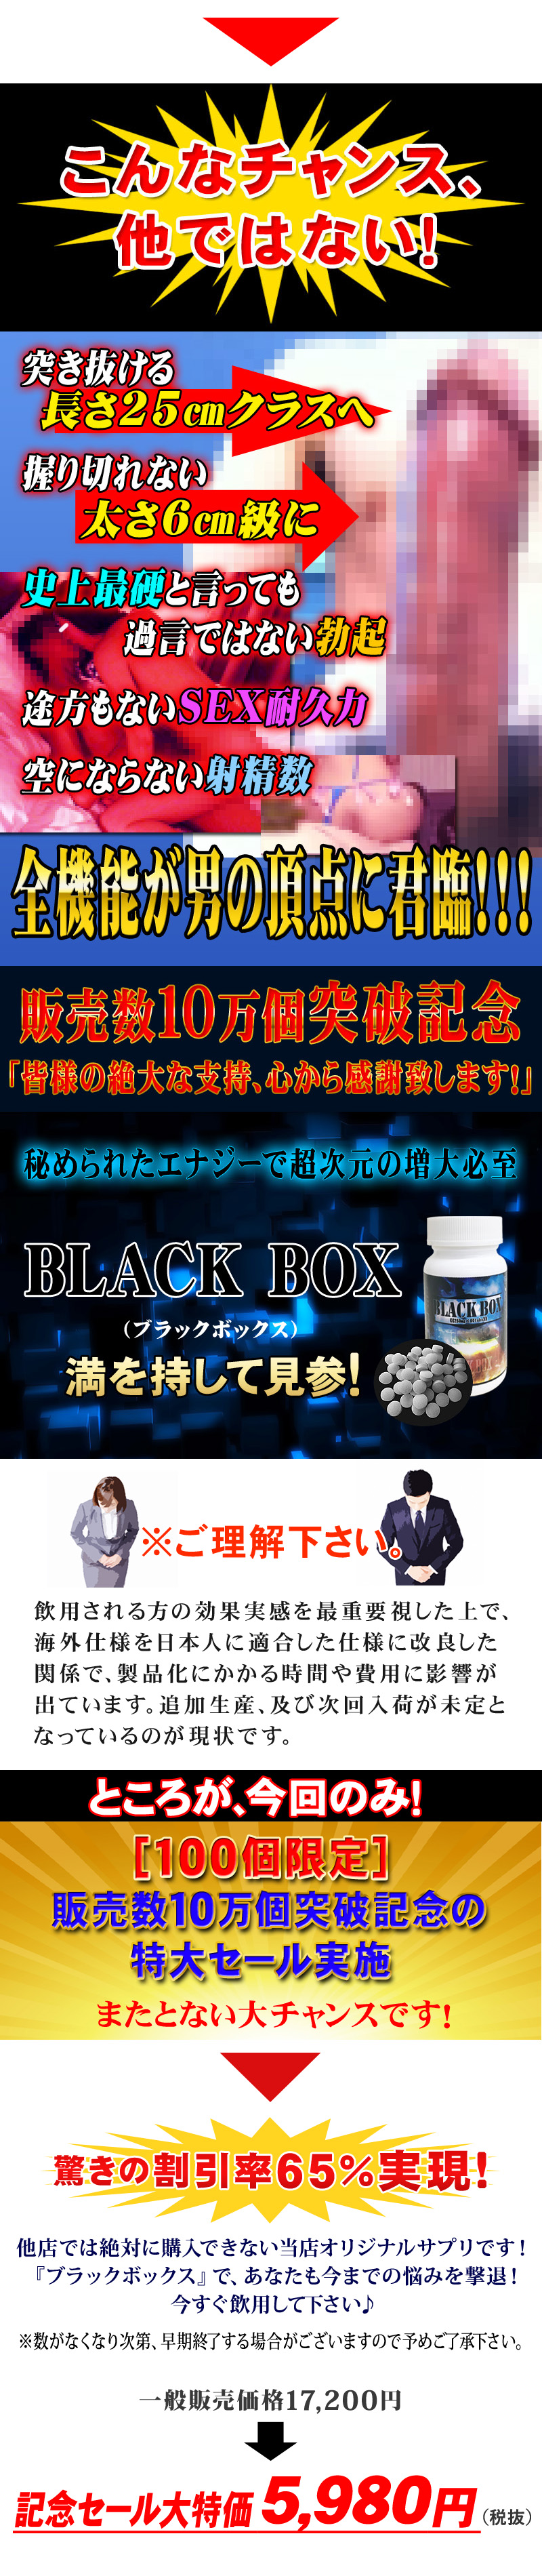 BLACK BOX(ブラックボックス)